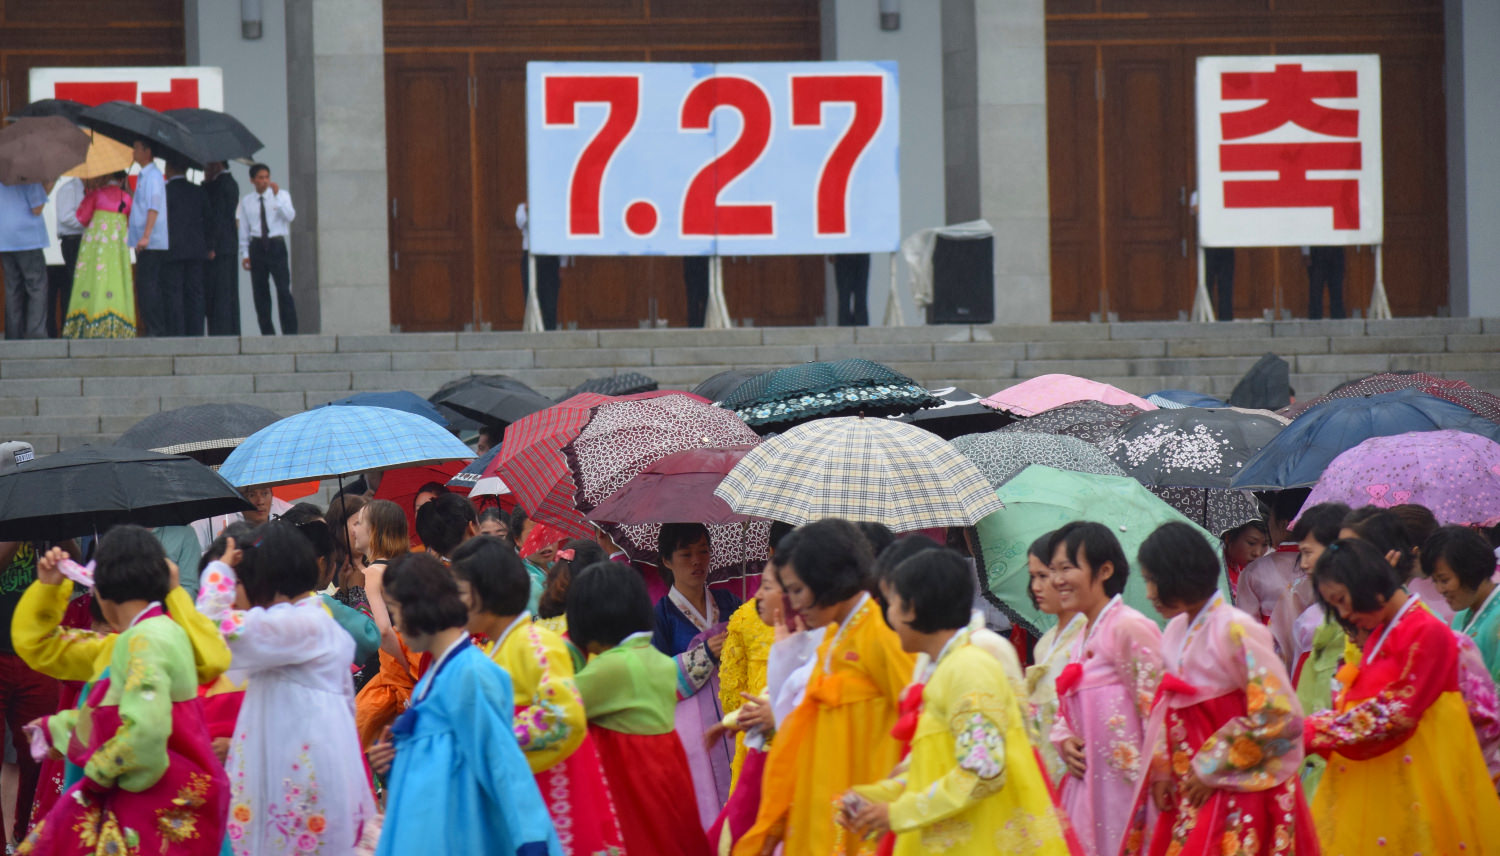 Mass Dances on Victory Day in Pyongyang. KTG arranges Korean language tours in North Korea